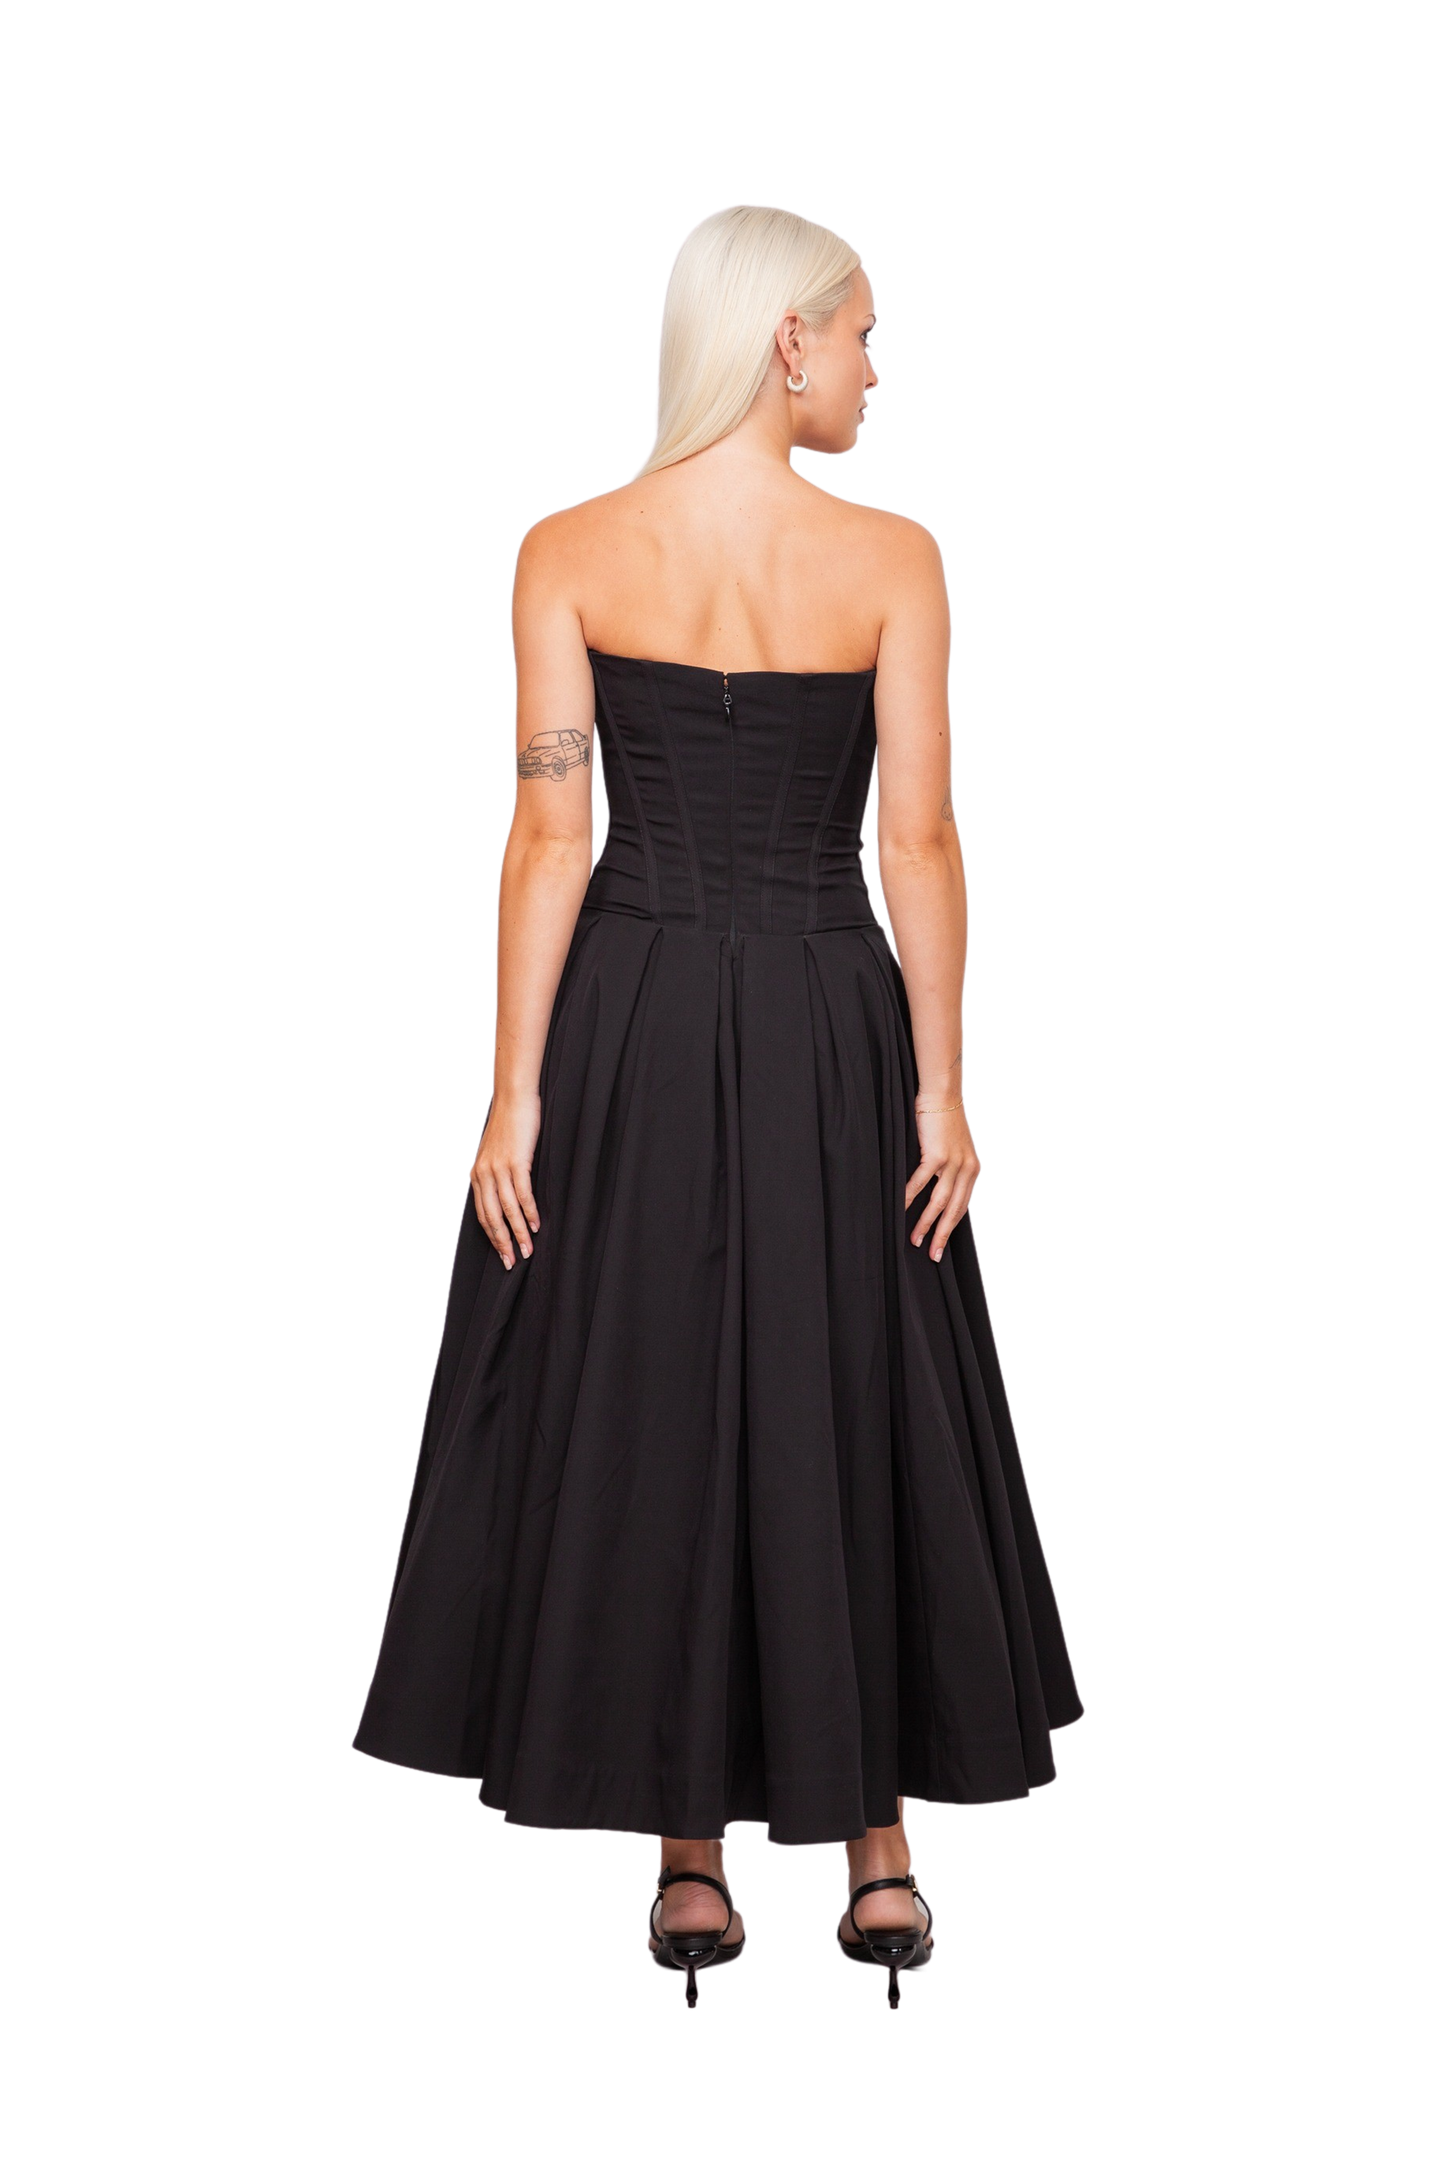 Lady Black Dress